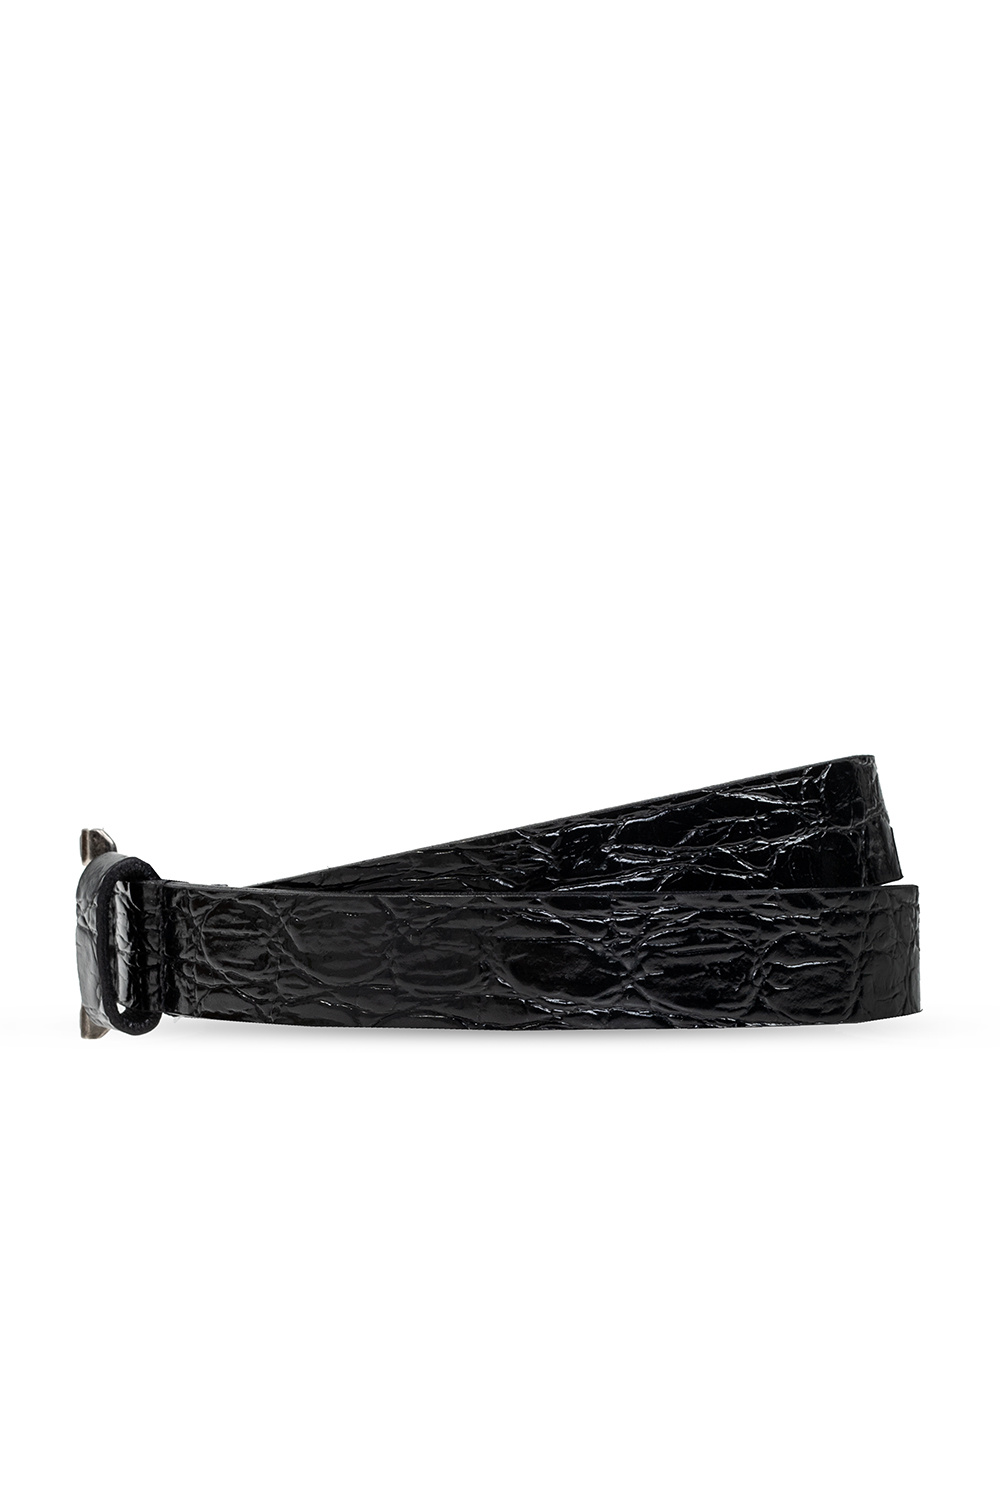 Yves Saint Laurent Men's Solid Leather Belt